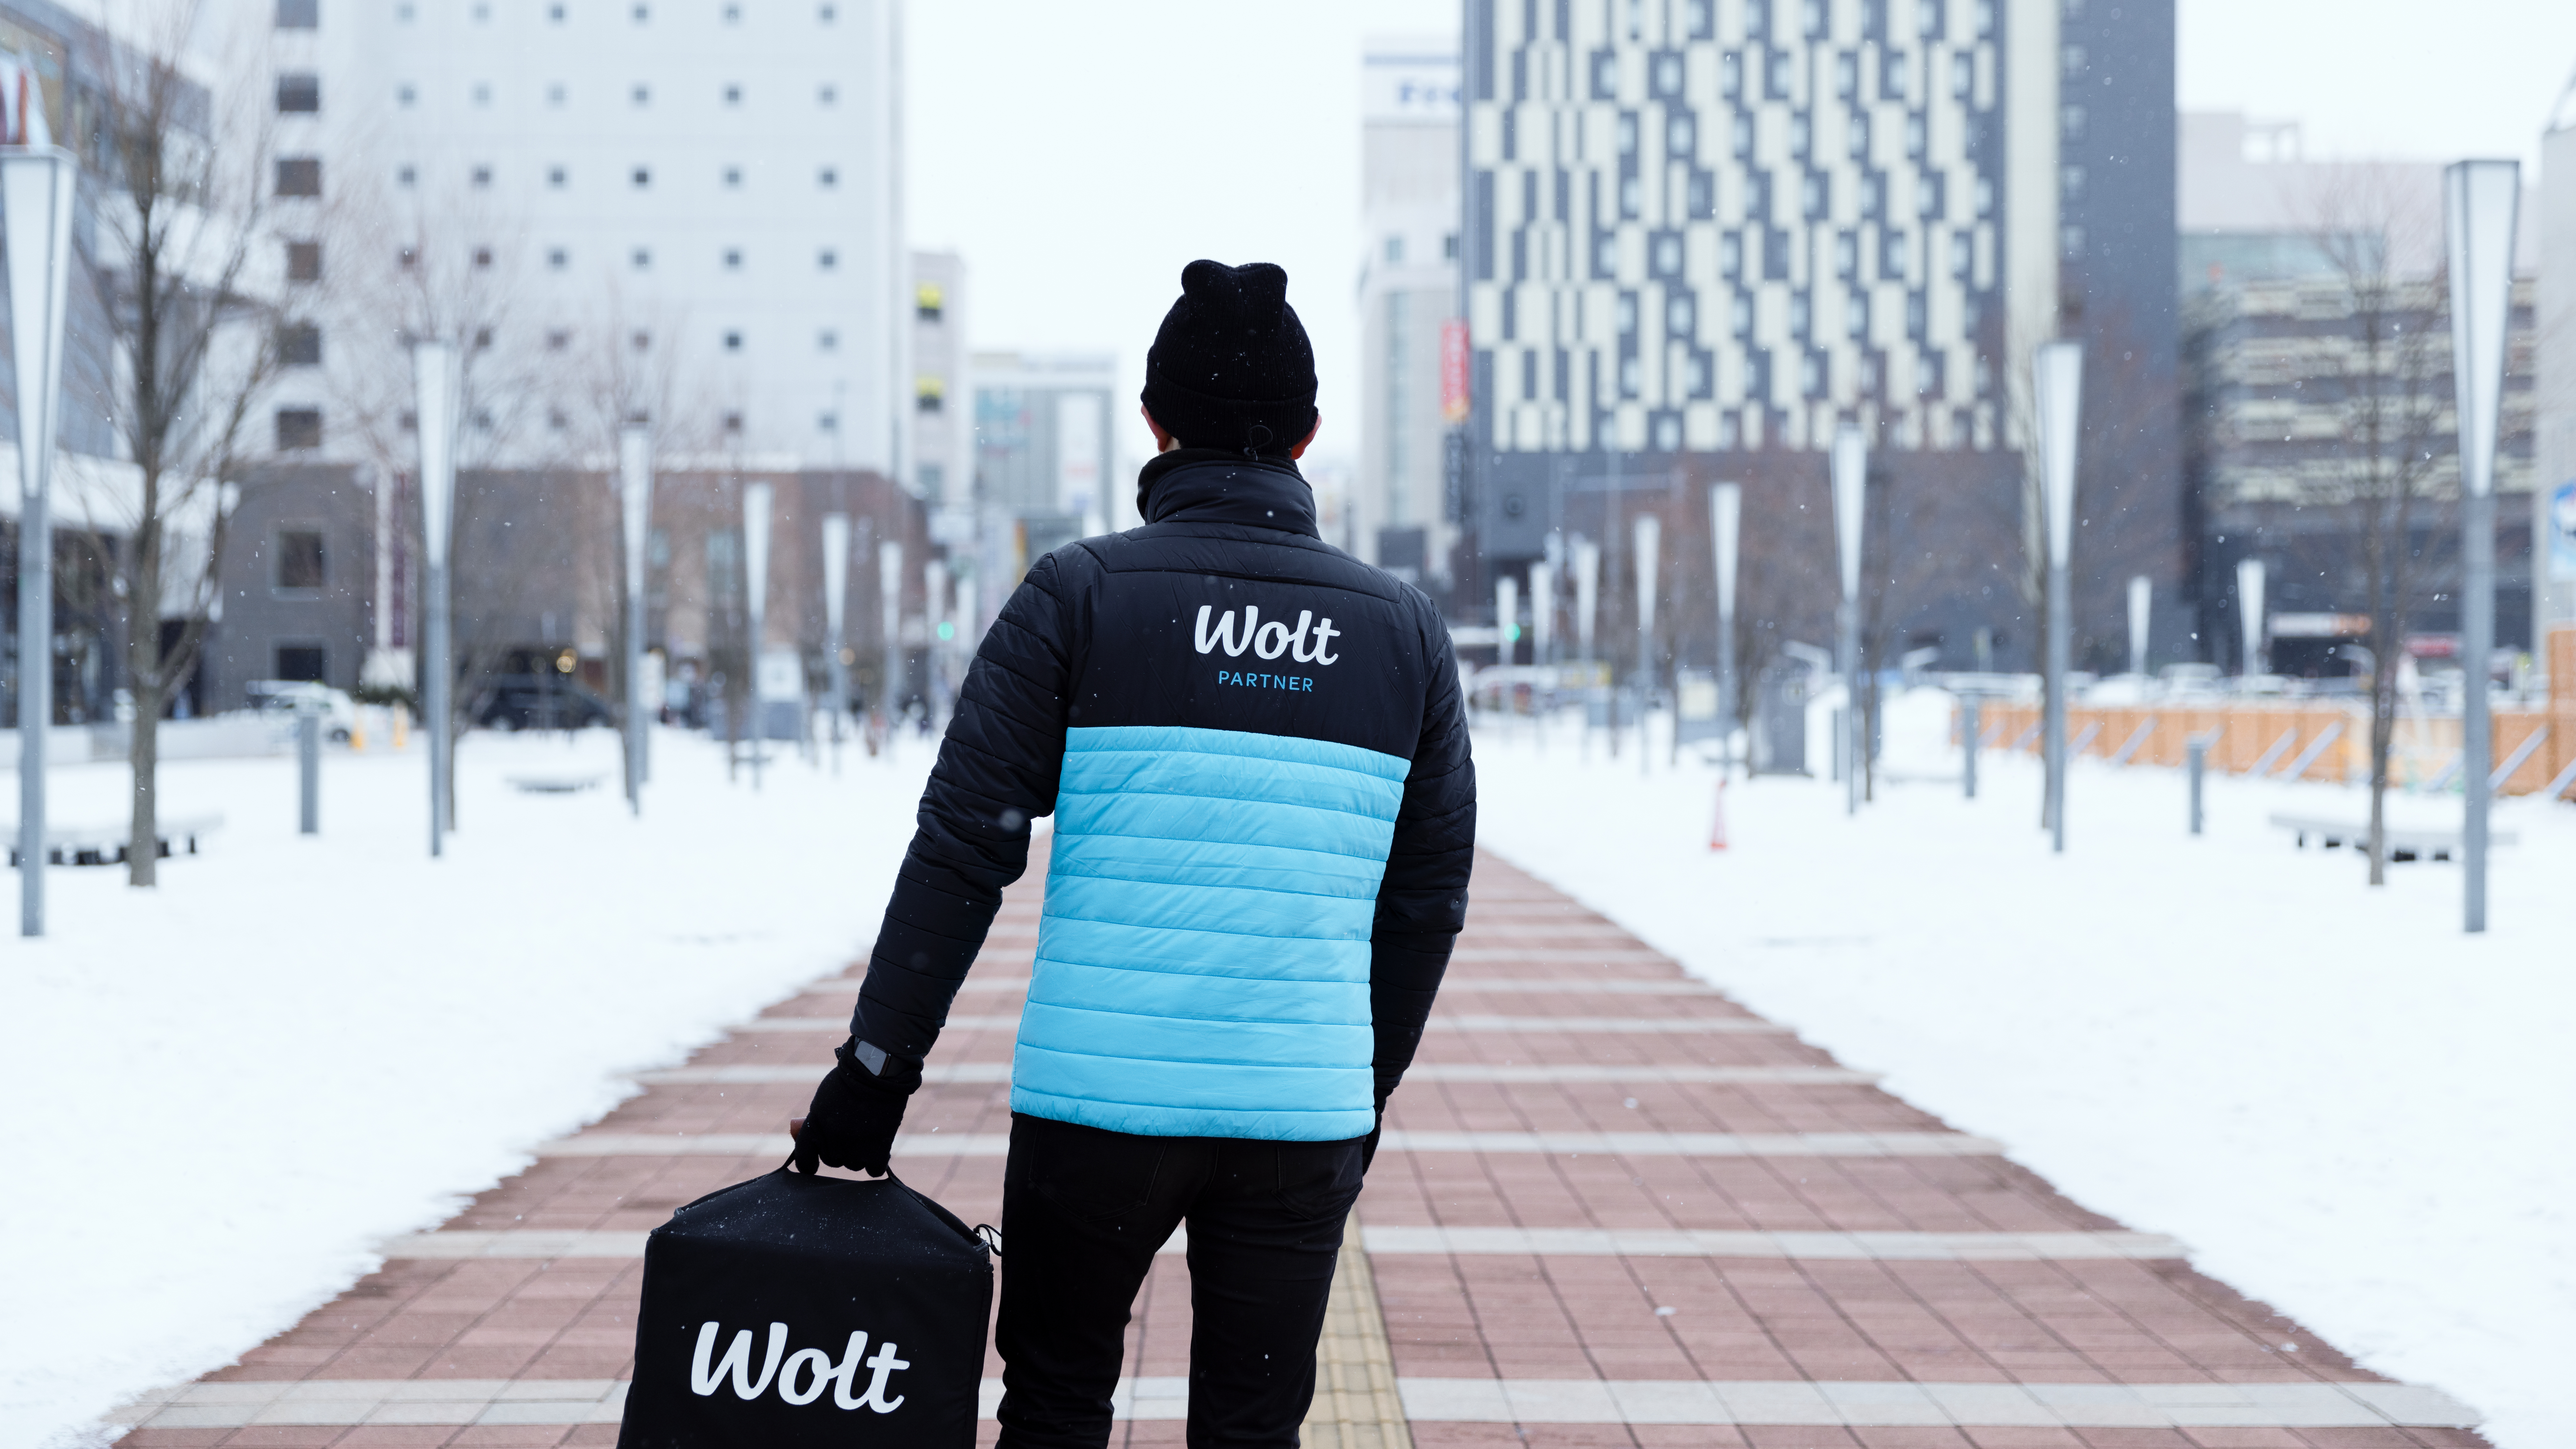 Wolt courier partner walking holding the Wolt heat bag